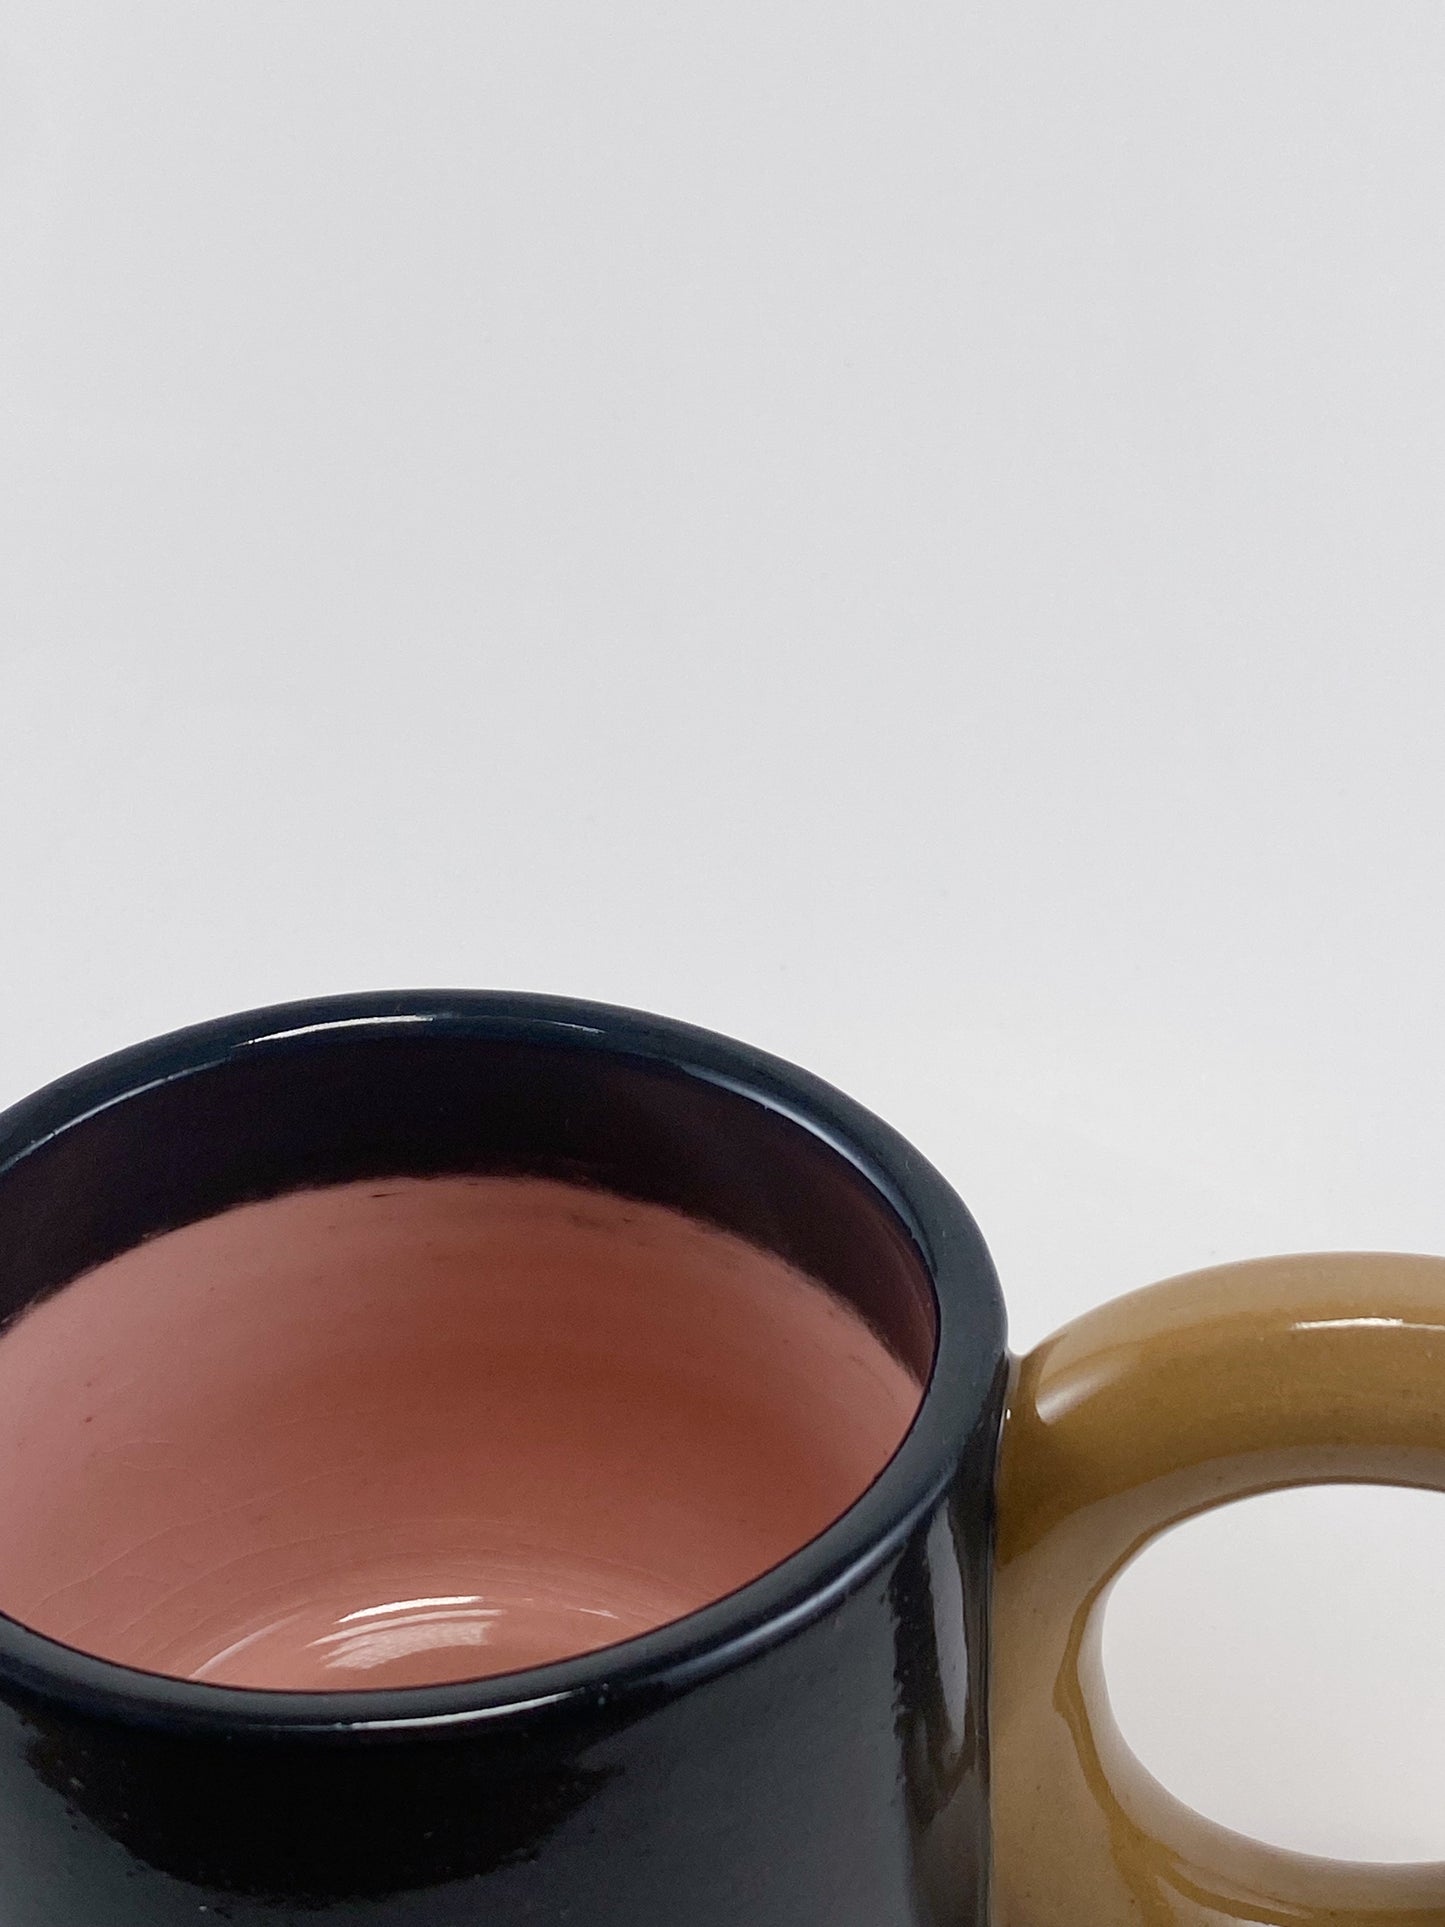 Tricolor Mug - Brown, Black, Pink